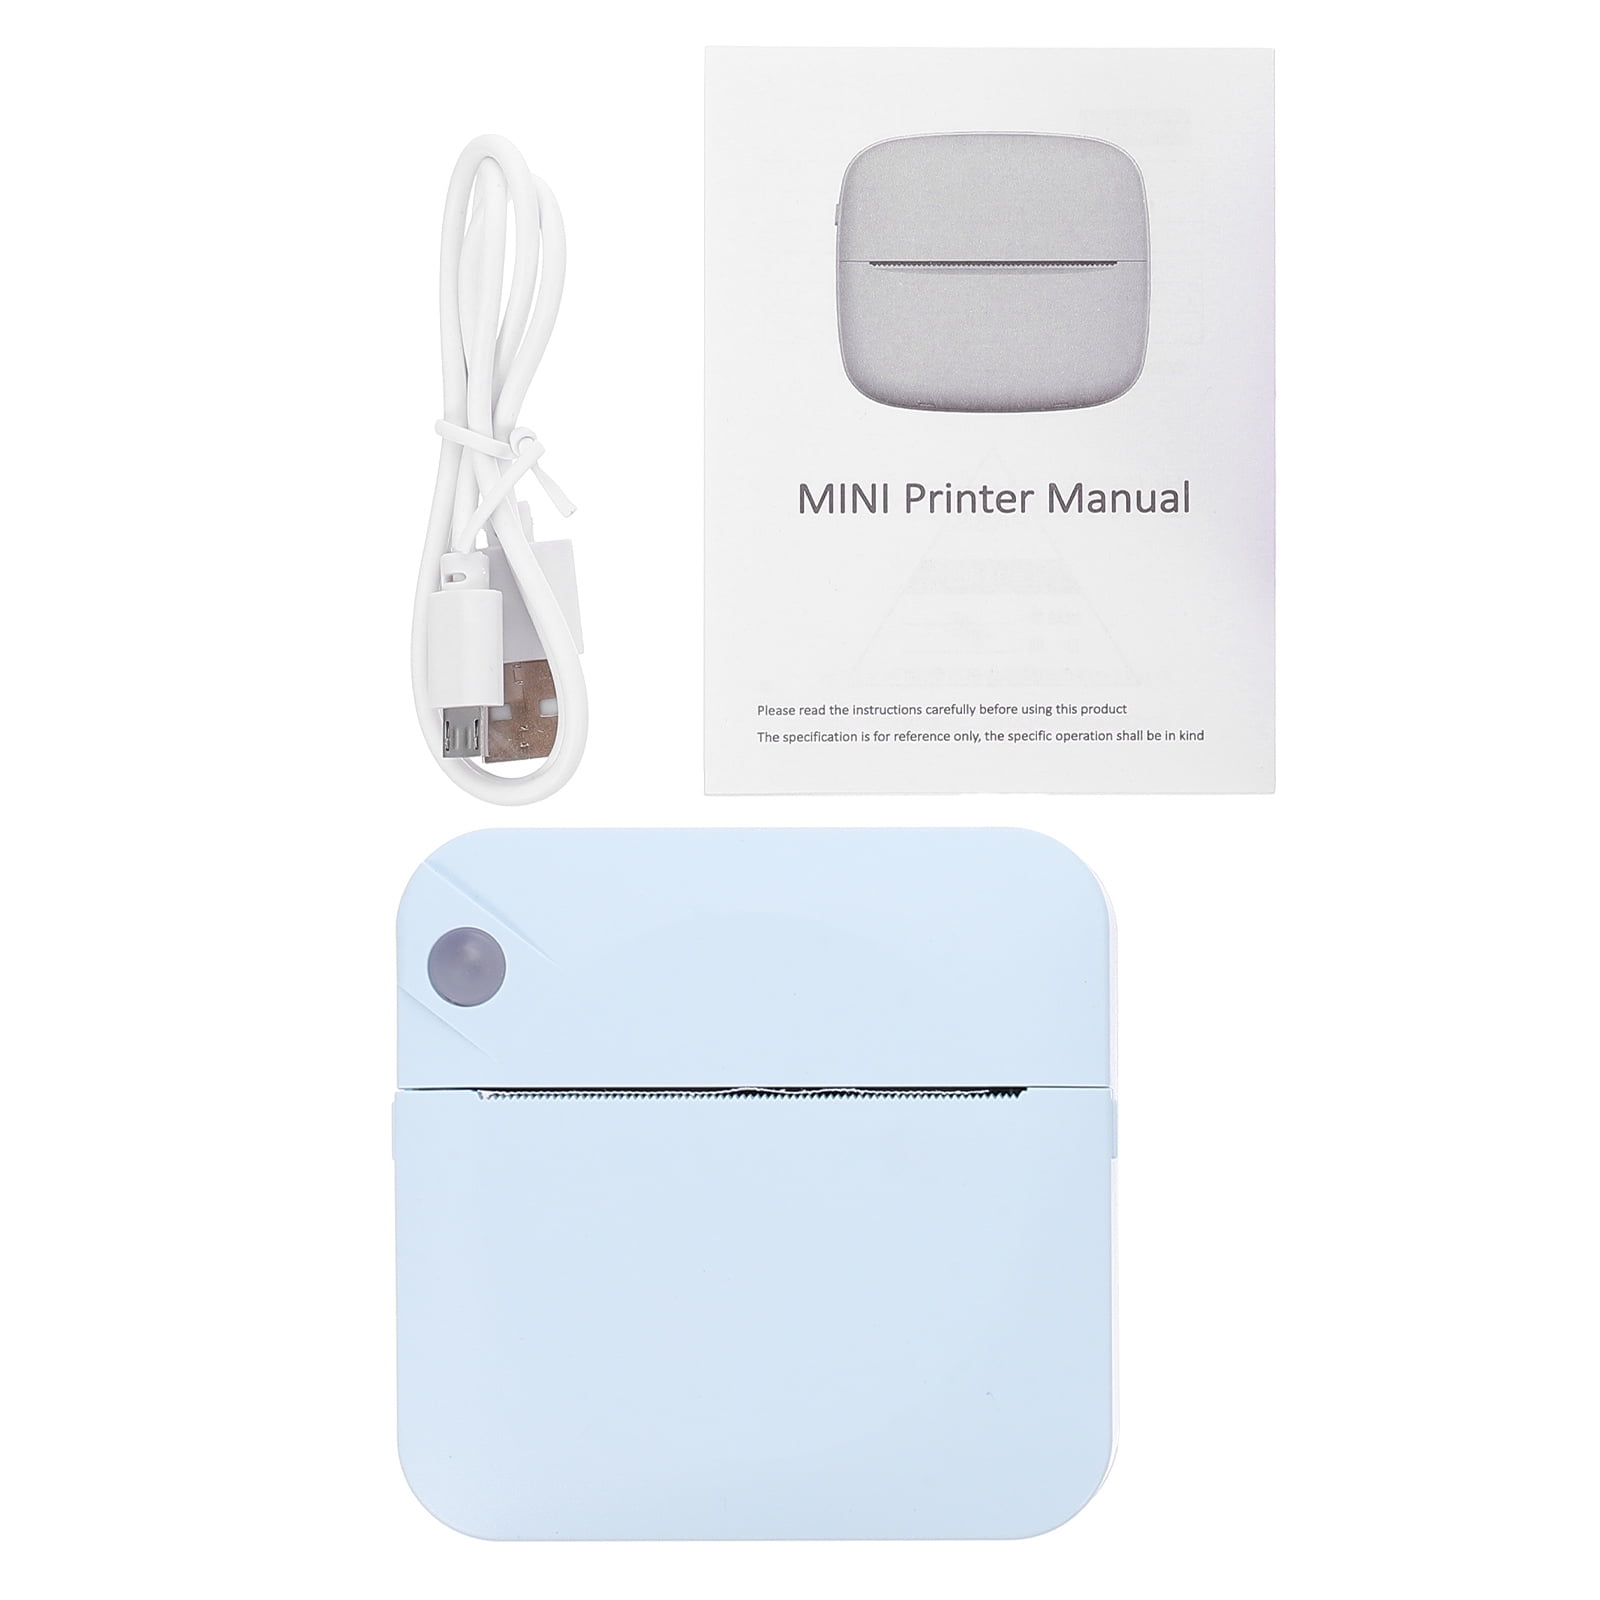 Xiaomi Photo Printer 300dpi Mi Portable Mini Pocket Picture Printer -  Xcessories Hub